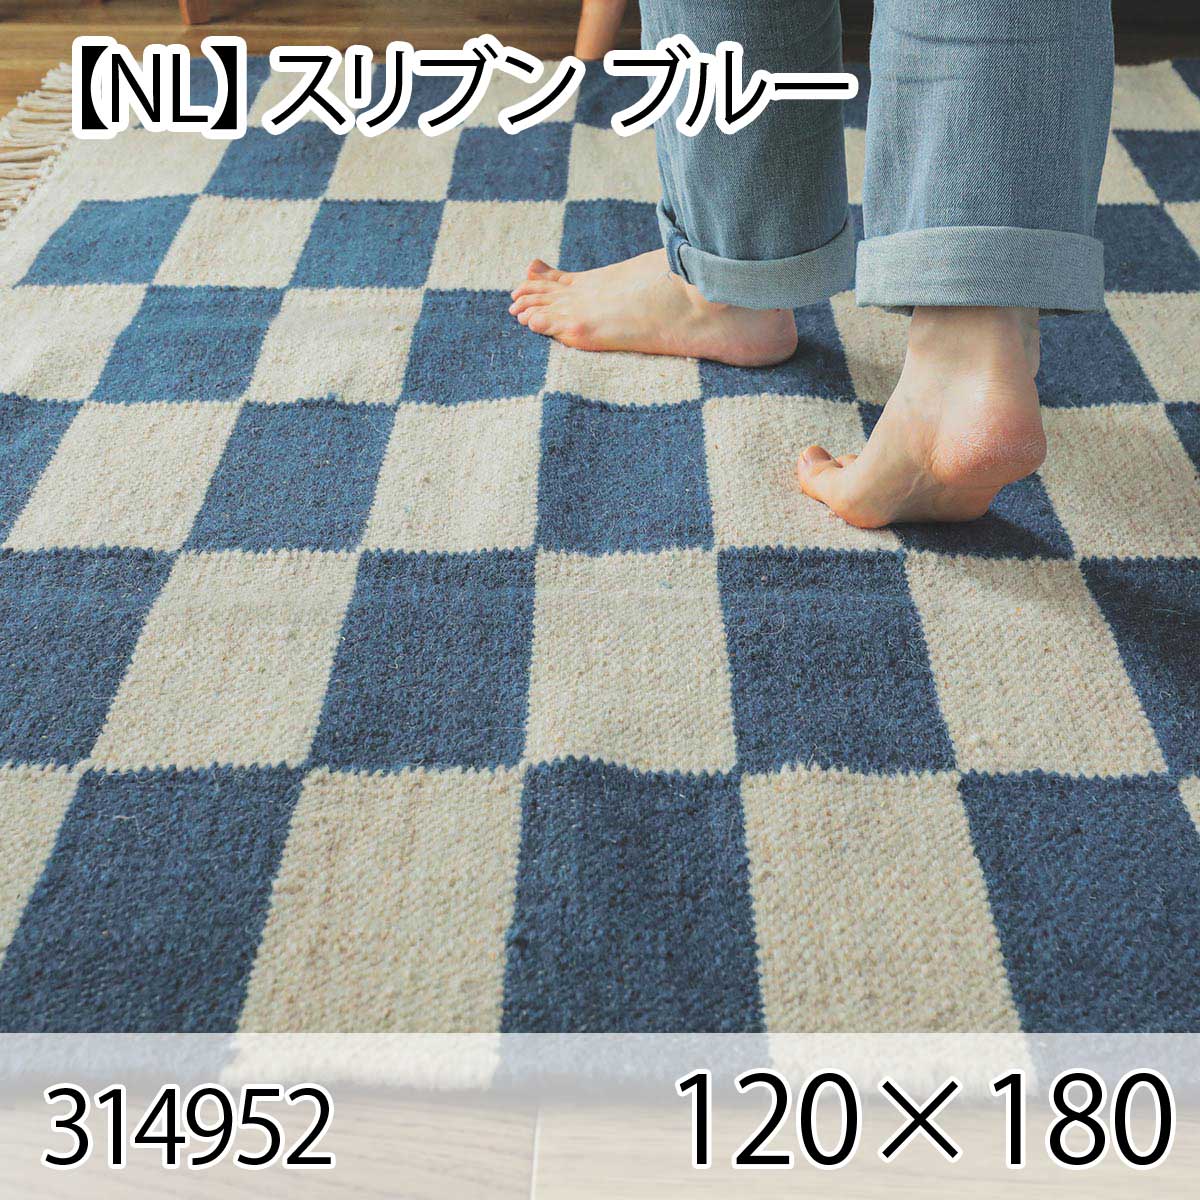 【NL】スリブン 120cmx180cm ブルー